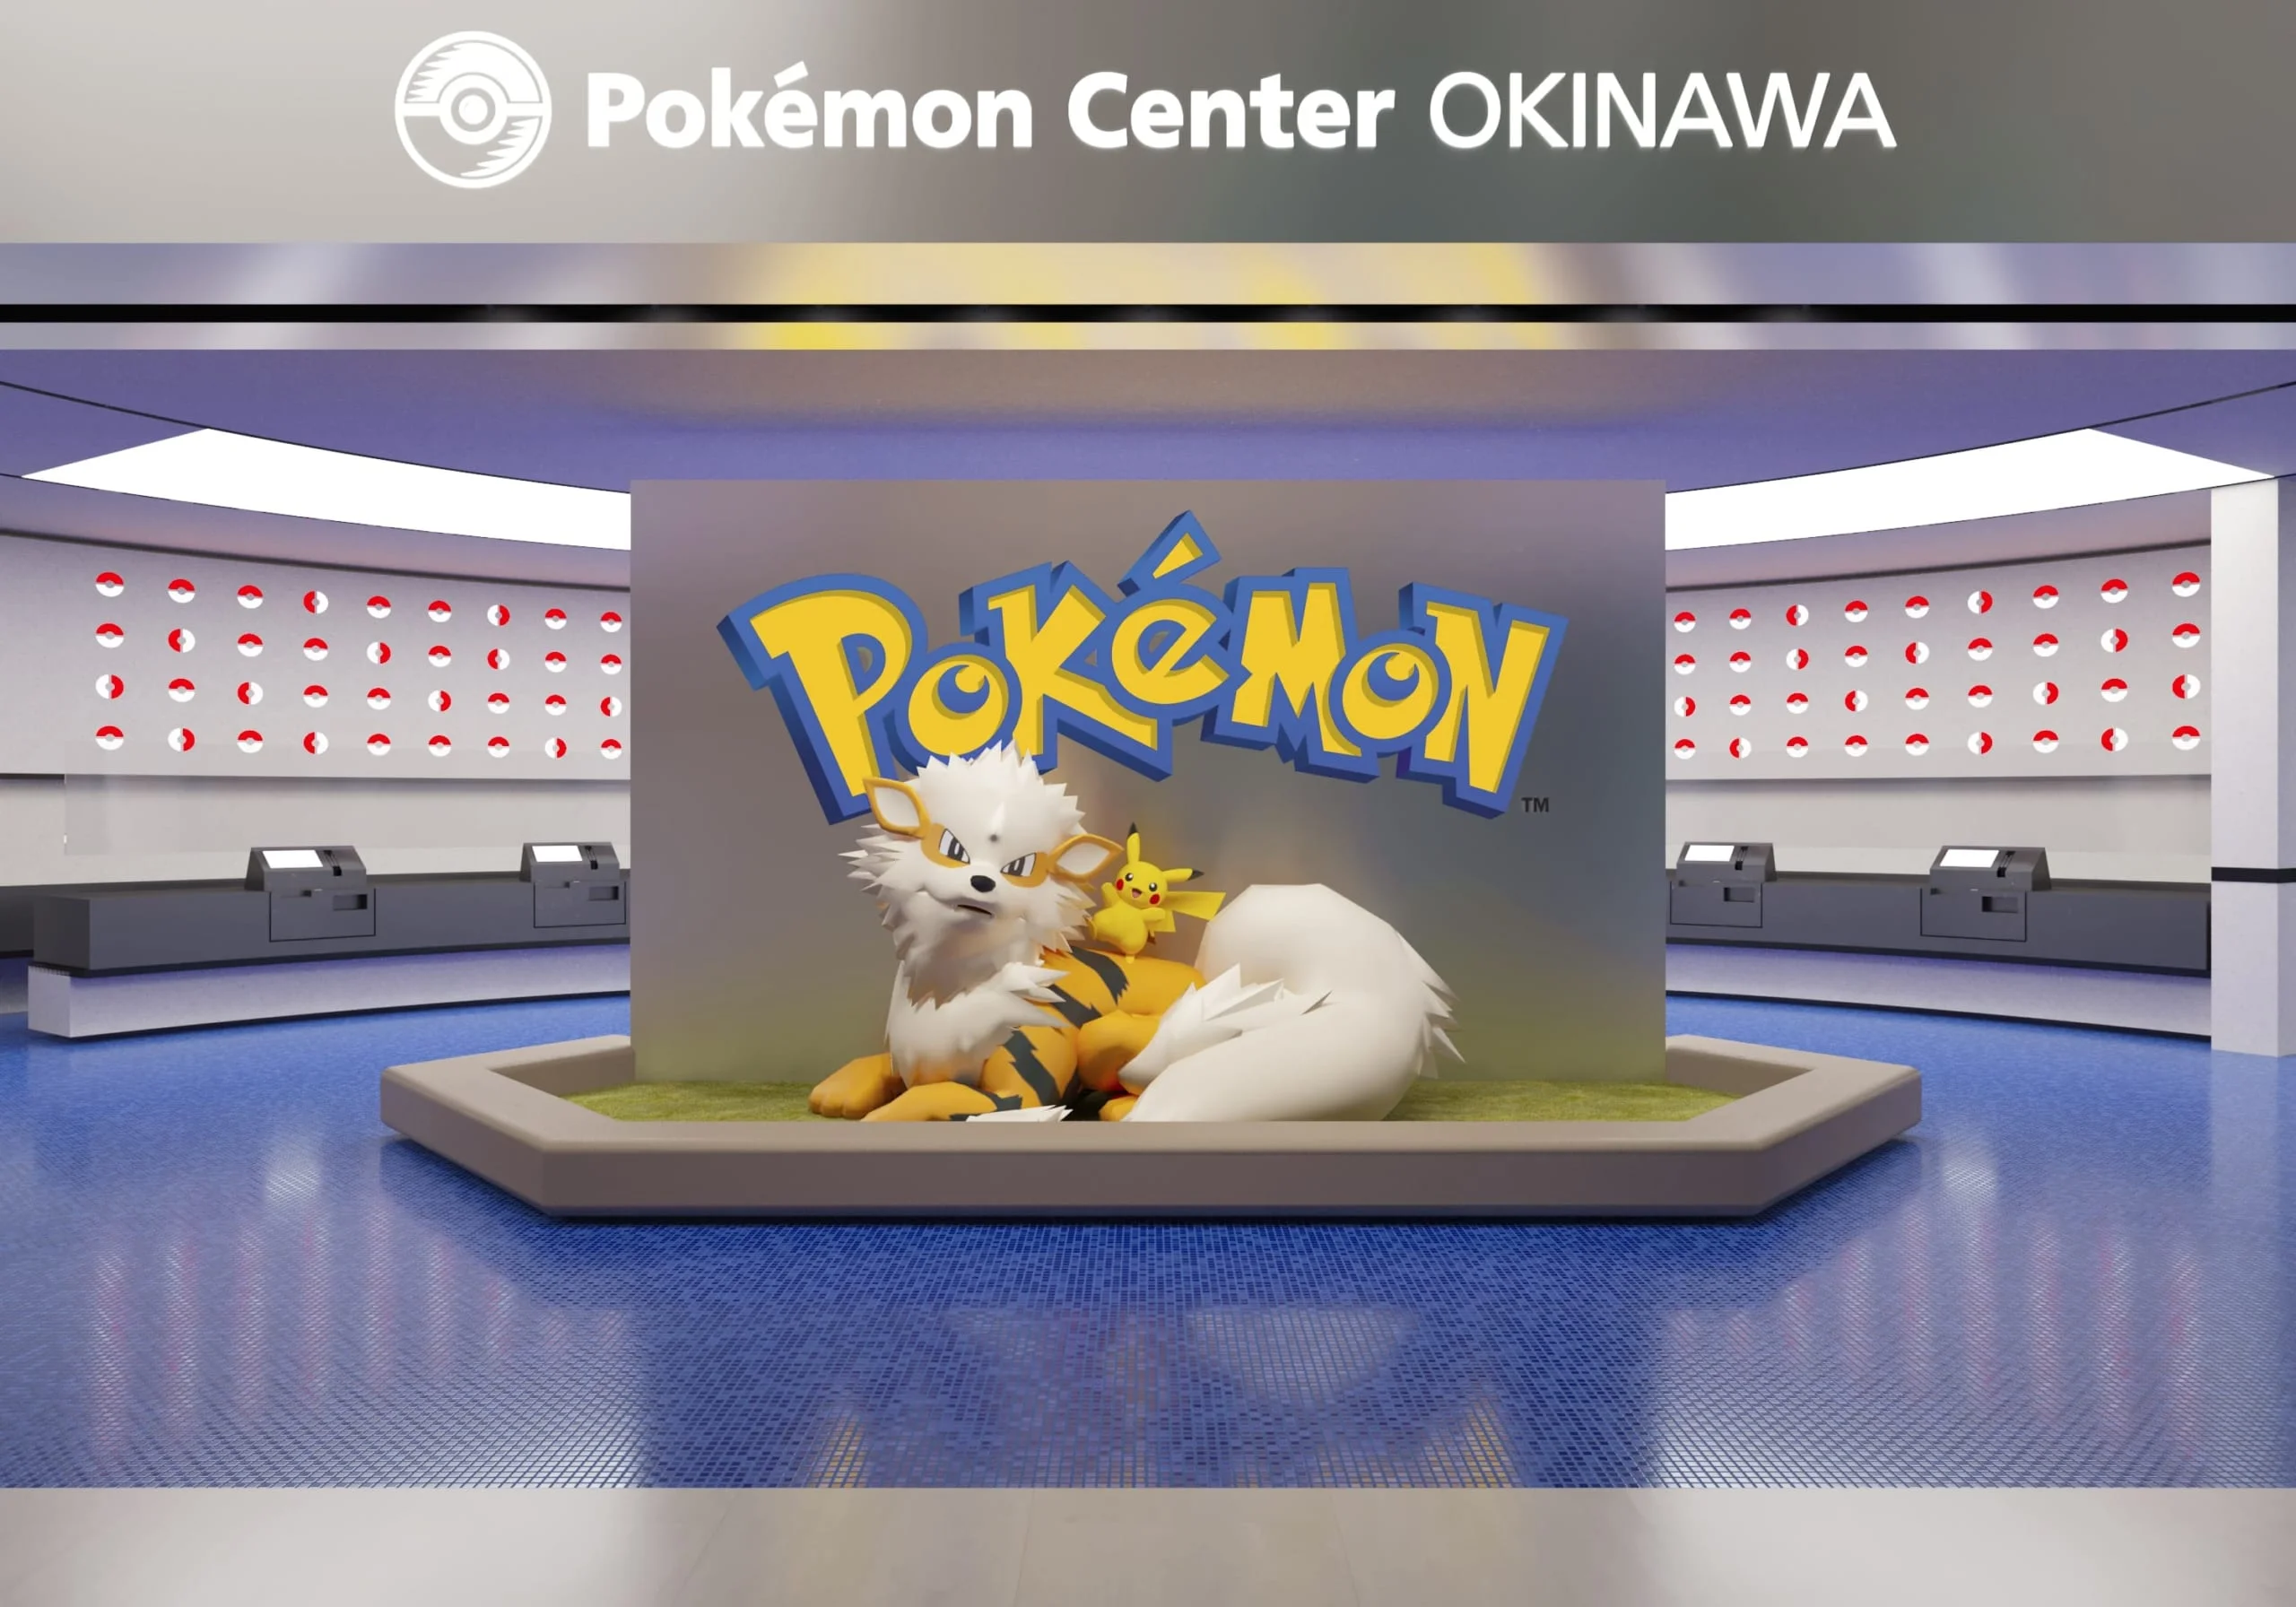 Pokémon Center Okinawa entrance featuring Pikachu and Arcanine